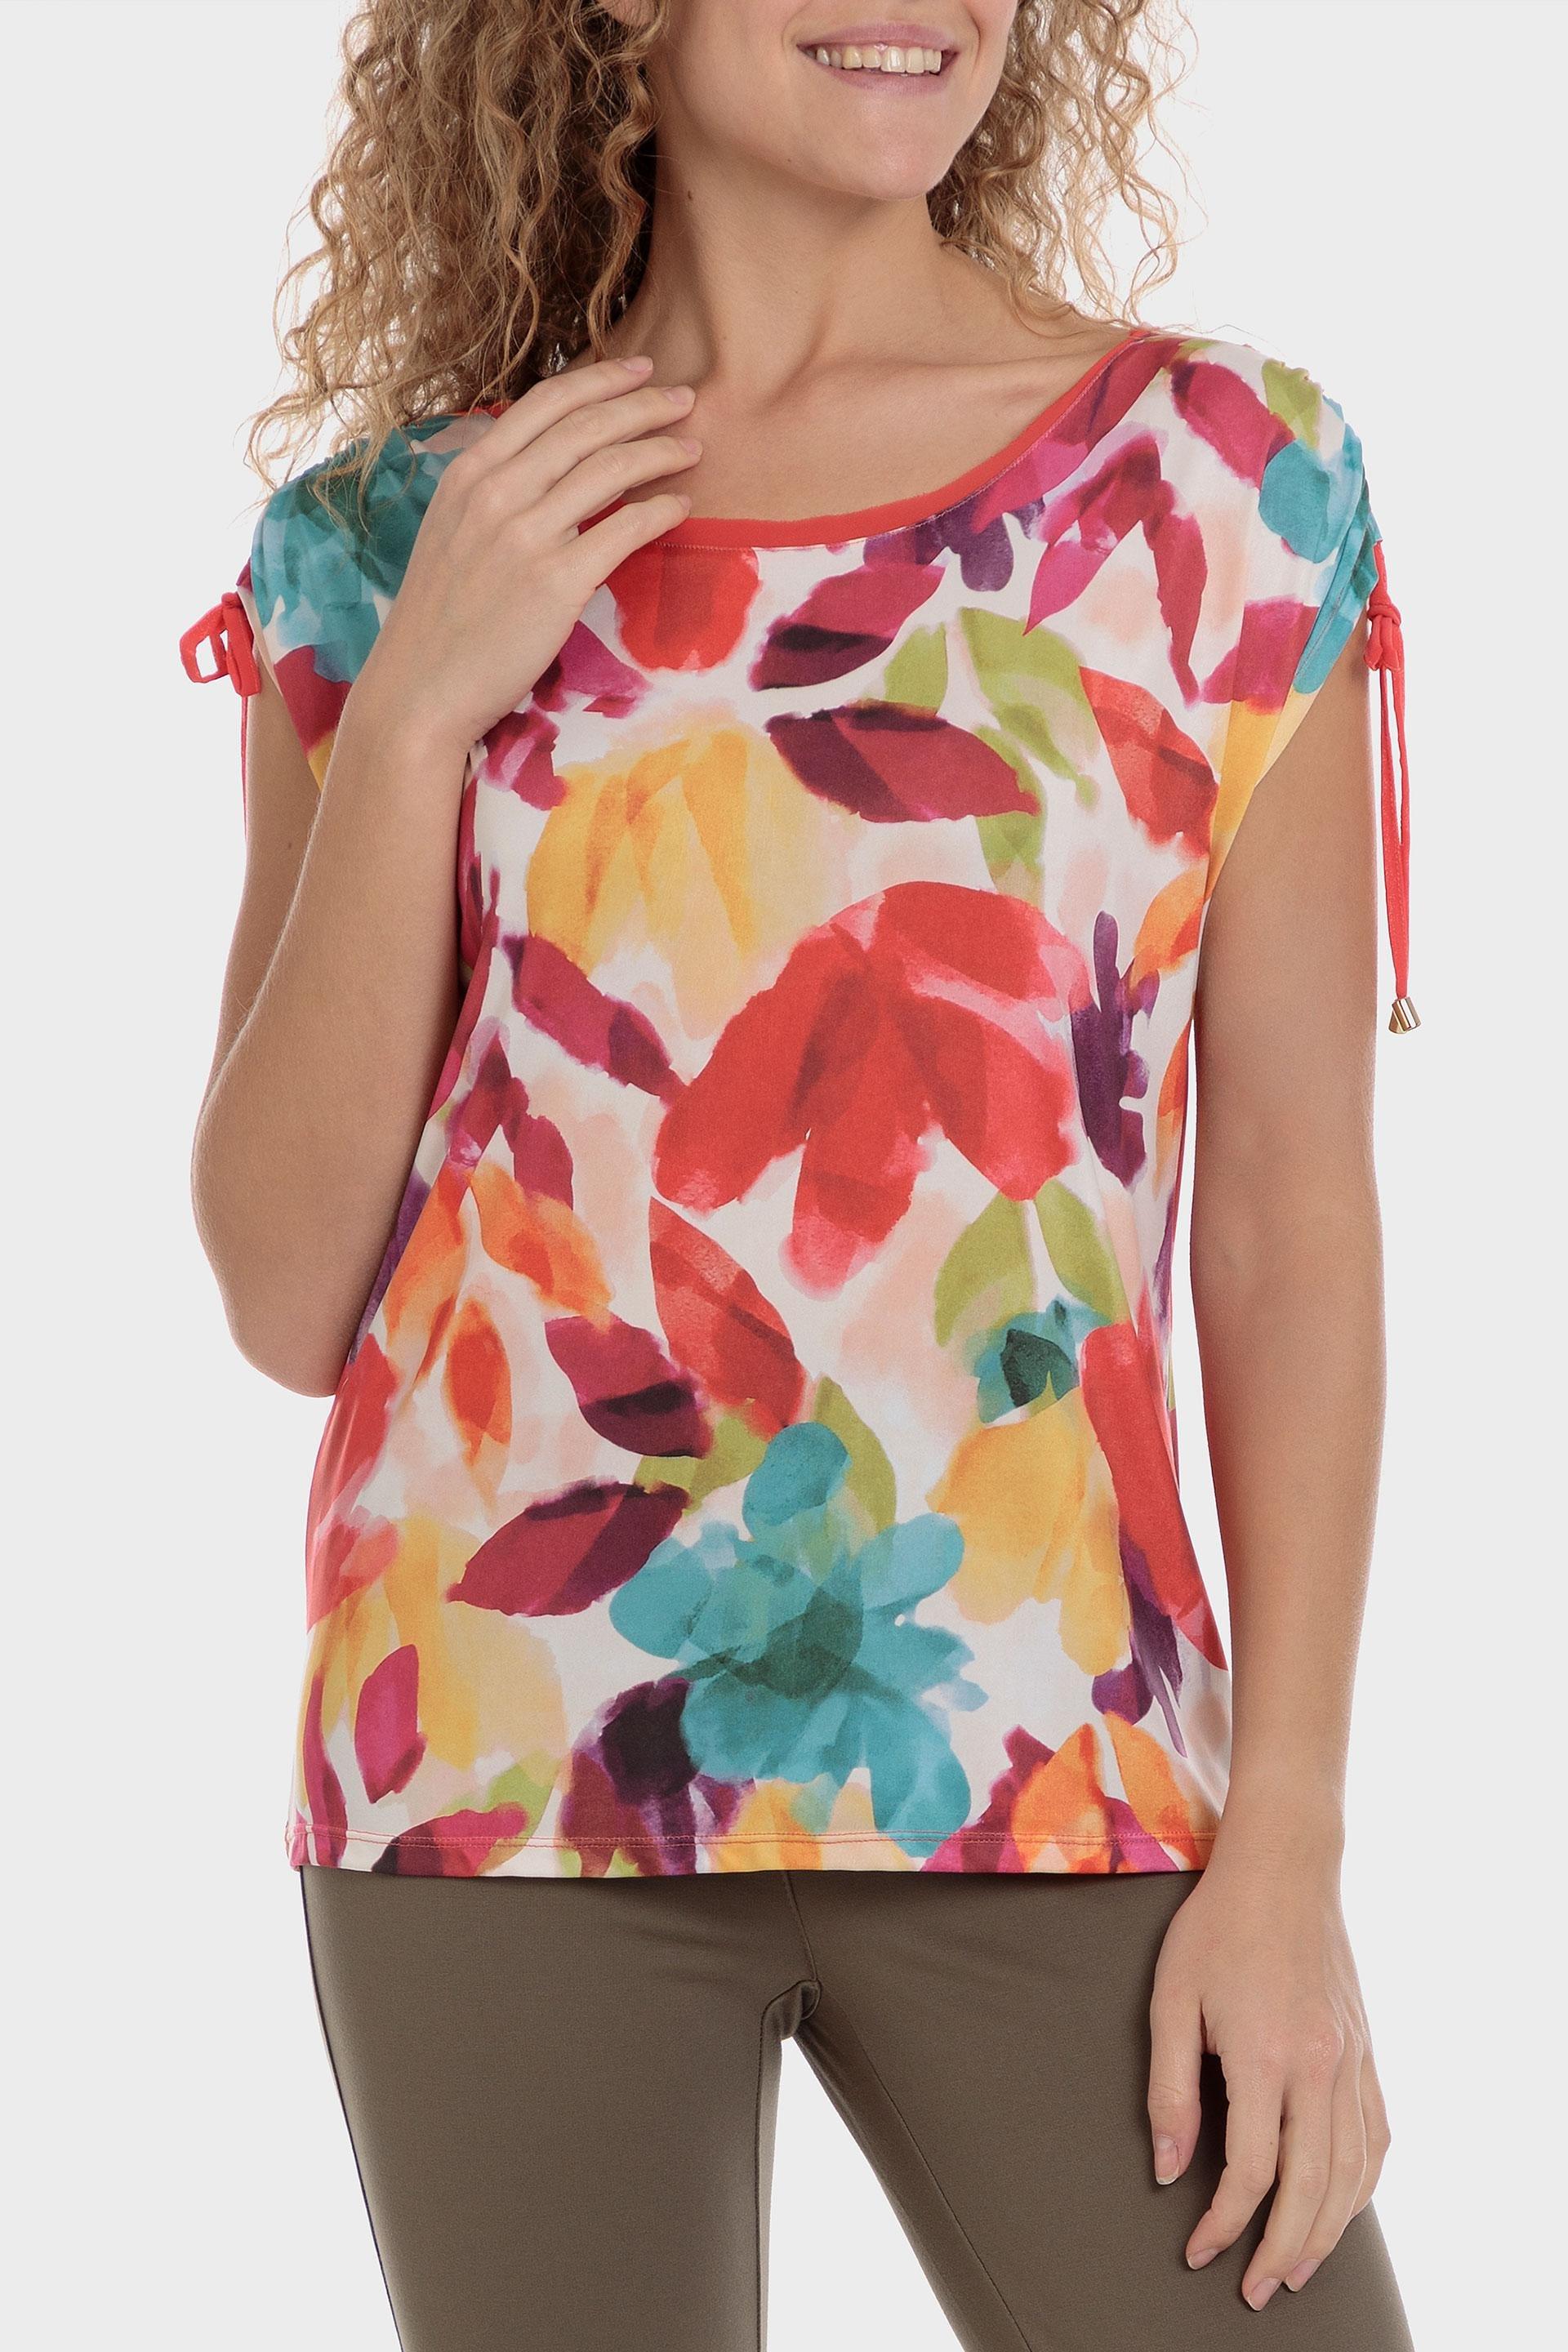 Punt Roma - Multicolour Printed T-Shirt